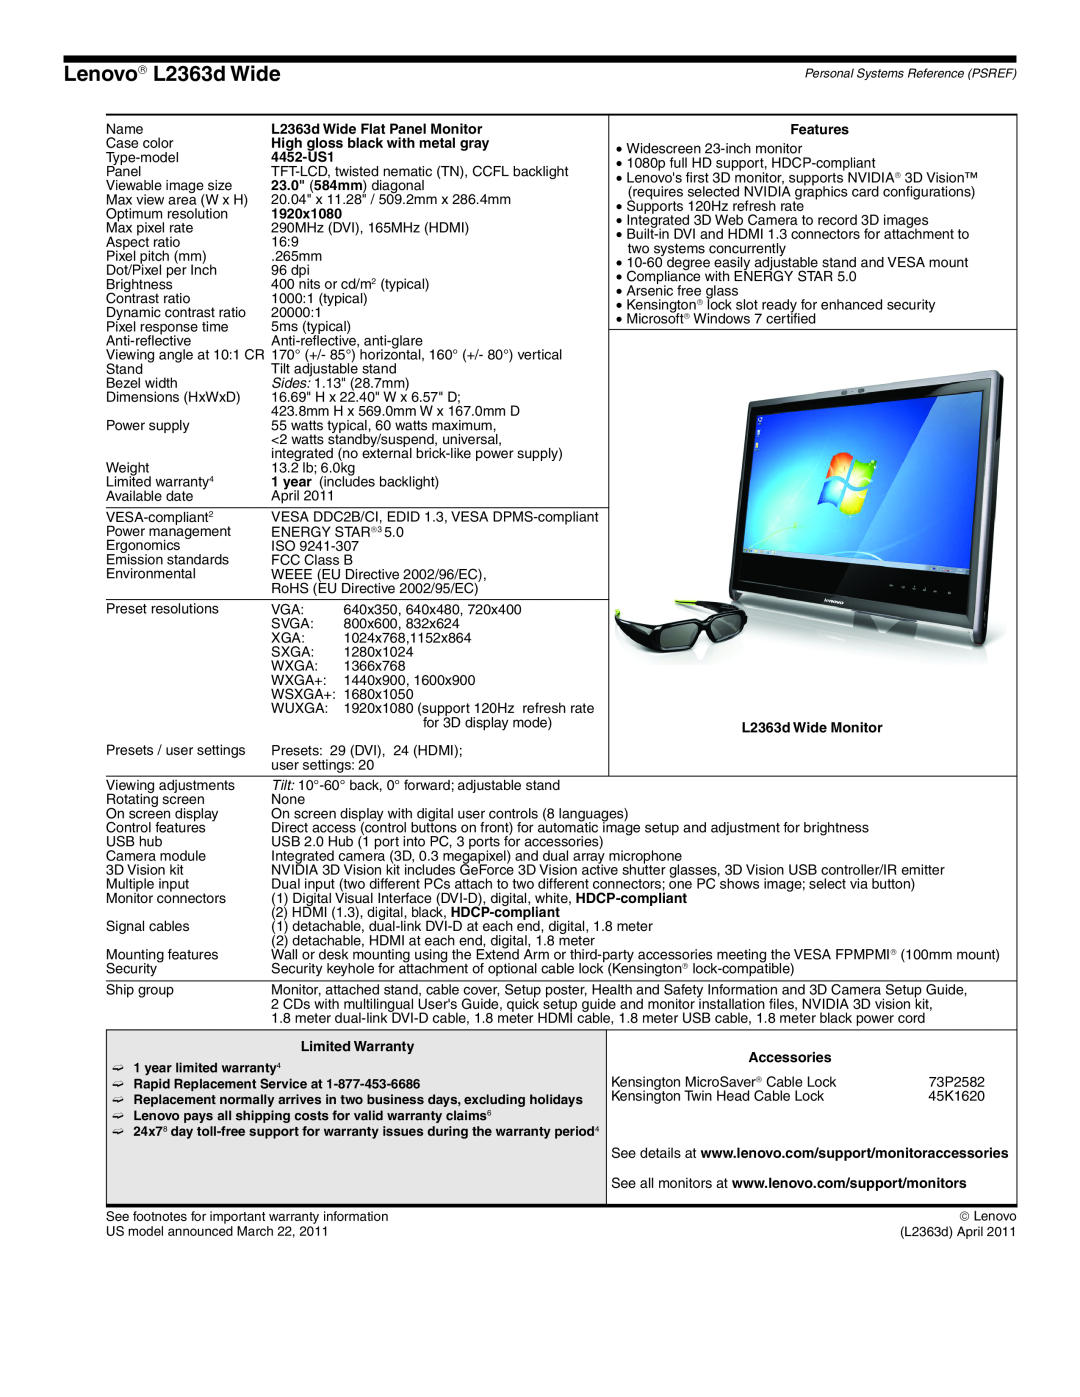 Lenovo L2363D manual Lenovo→ L2363d Wide 